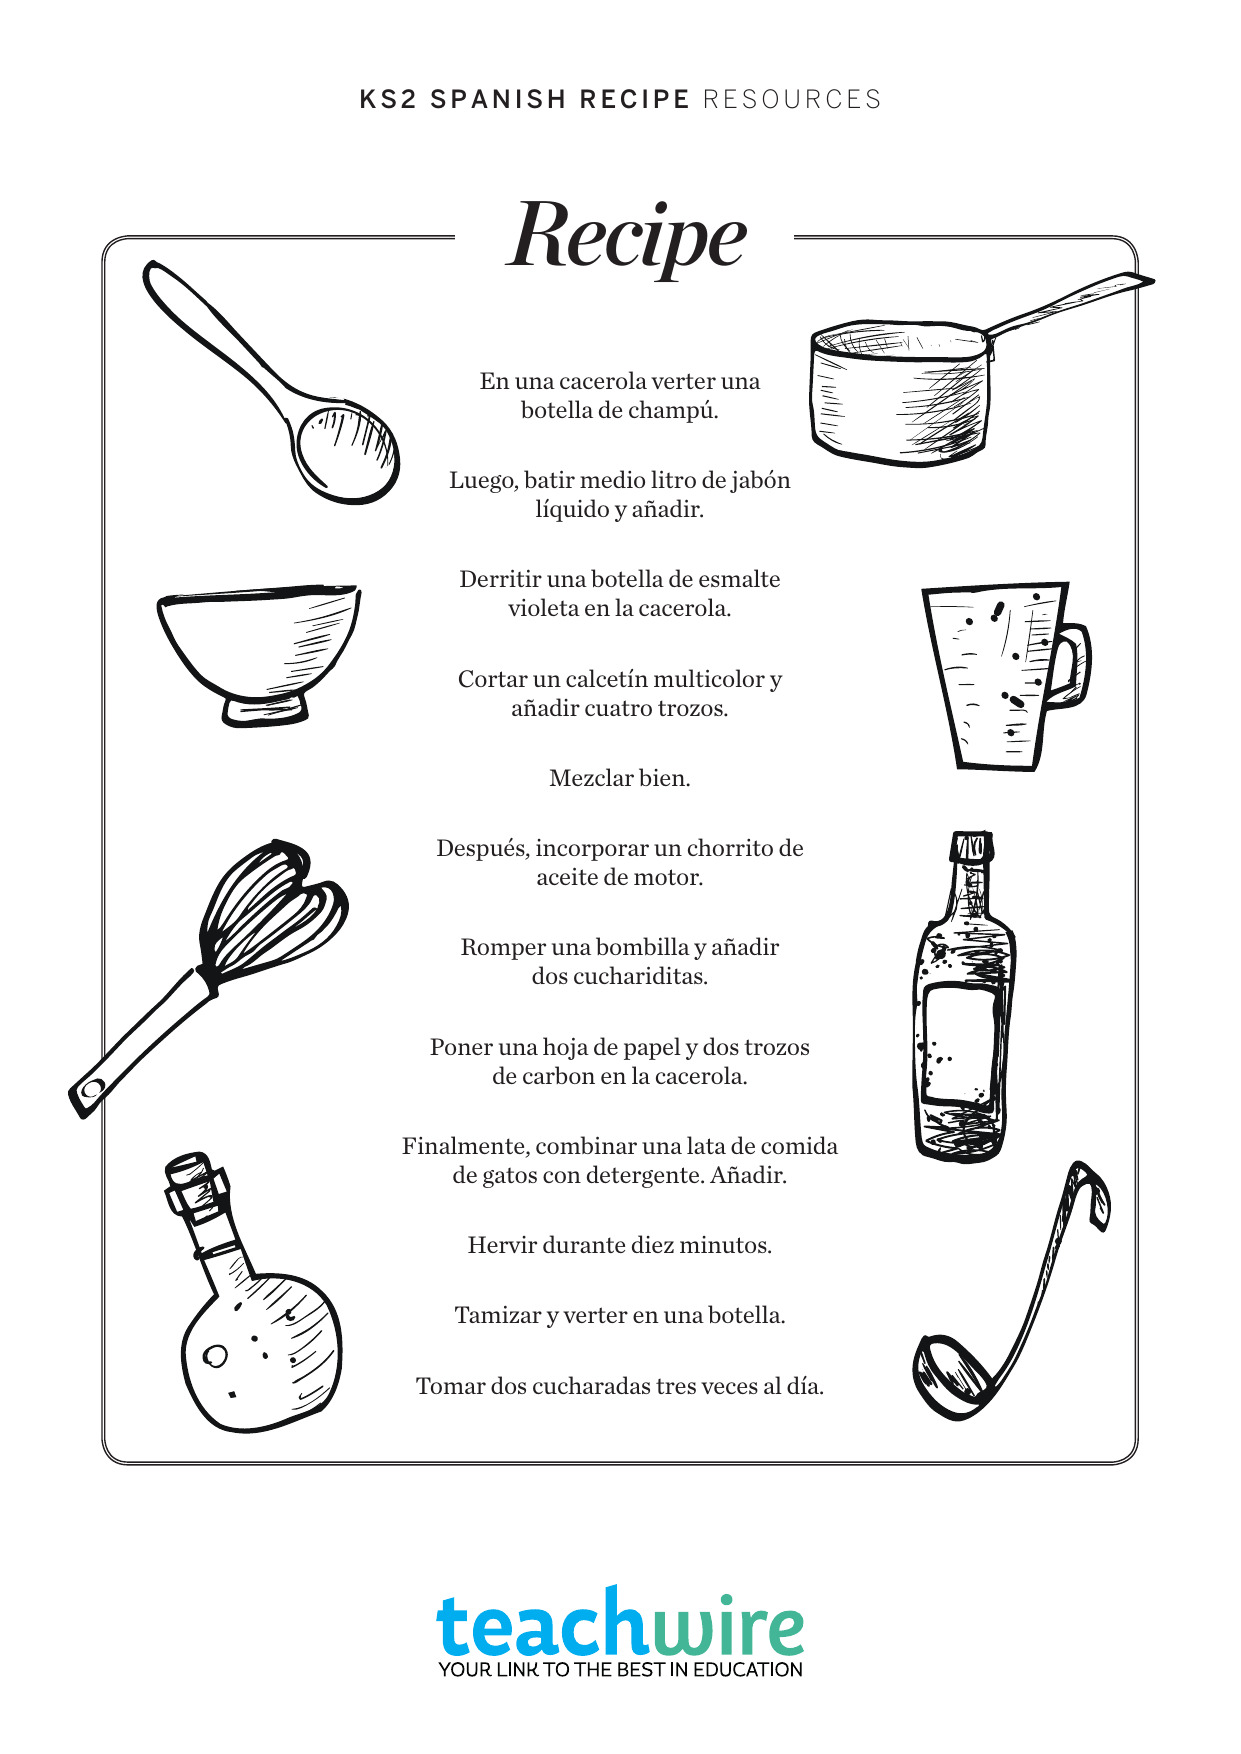 KS2 Spanish Recipe Resources | Teachwire Teaching Resource